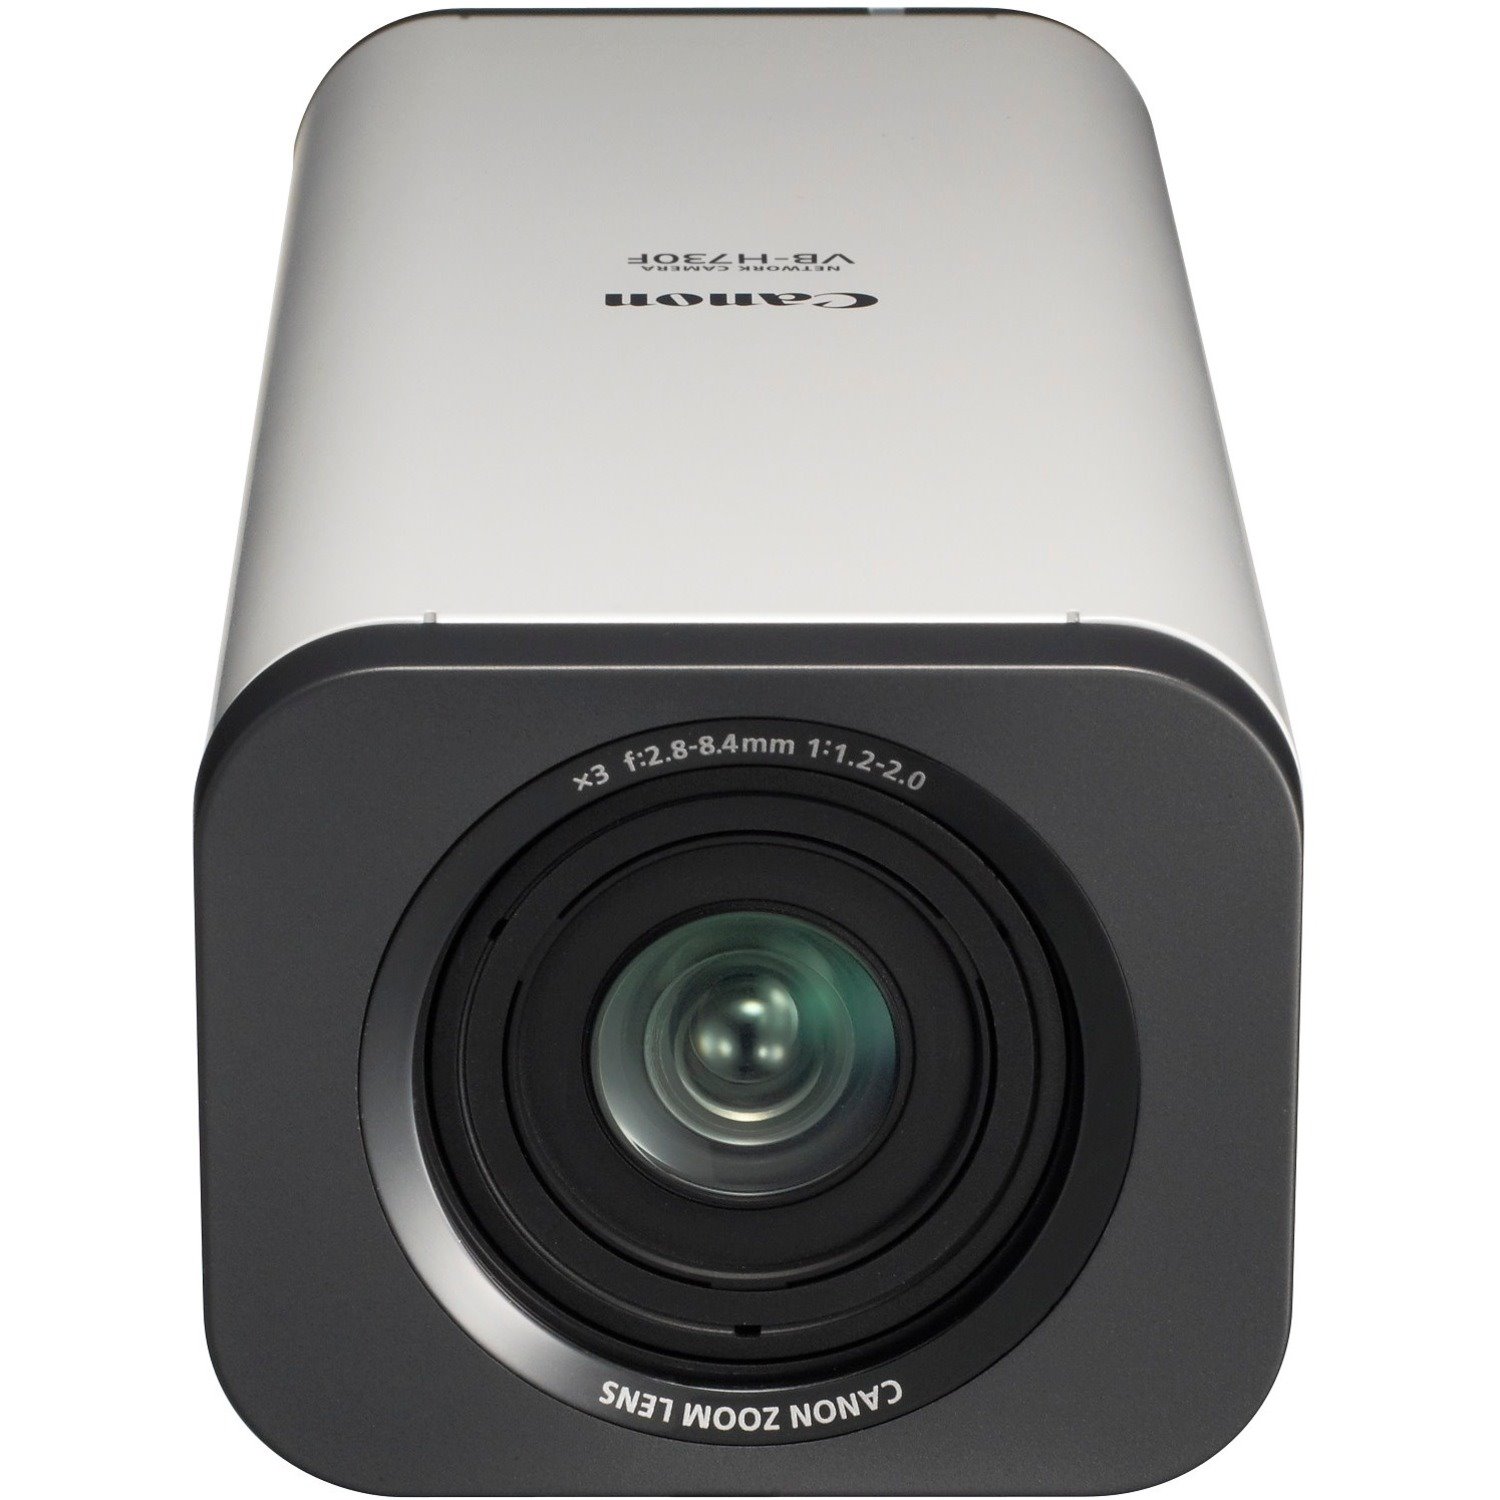 Canon VB-H730F 2.1 Megapixel HD Network Camera - Colour - Box